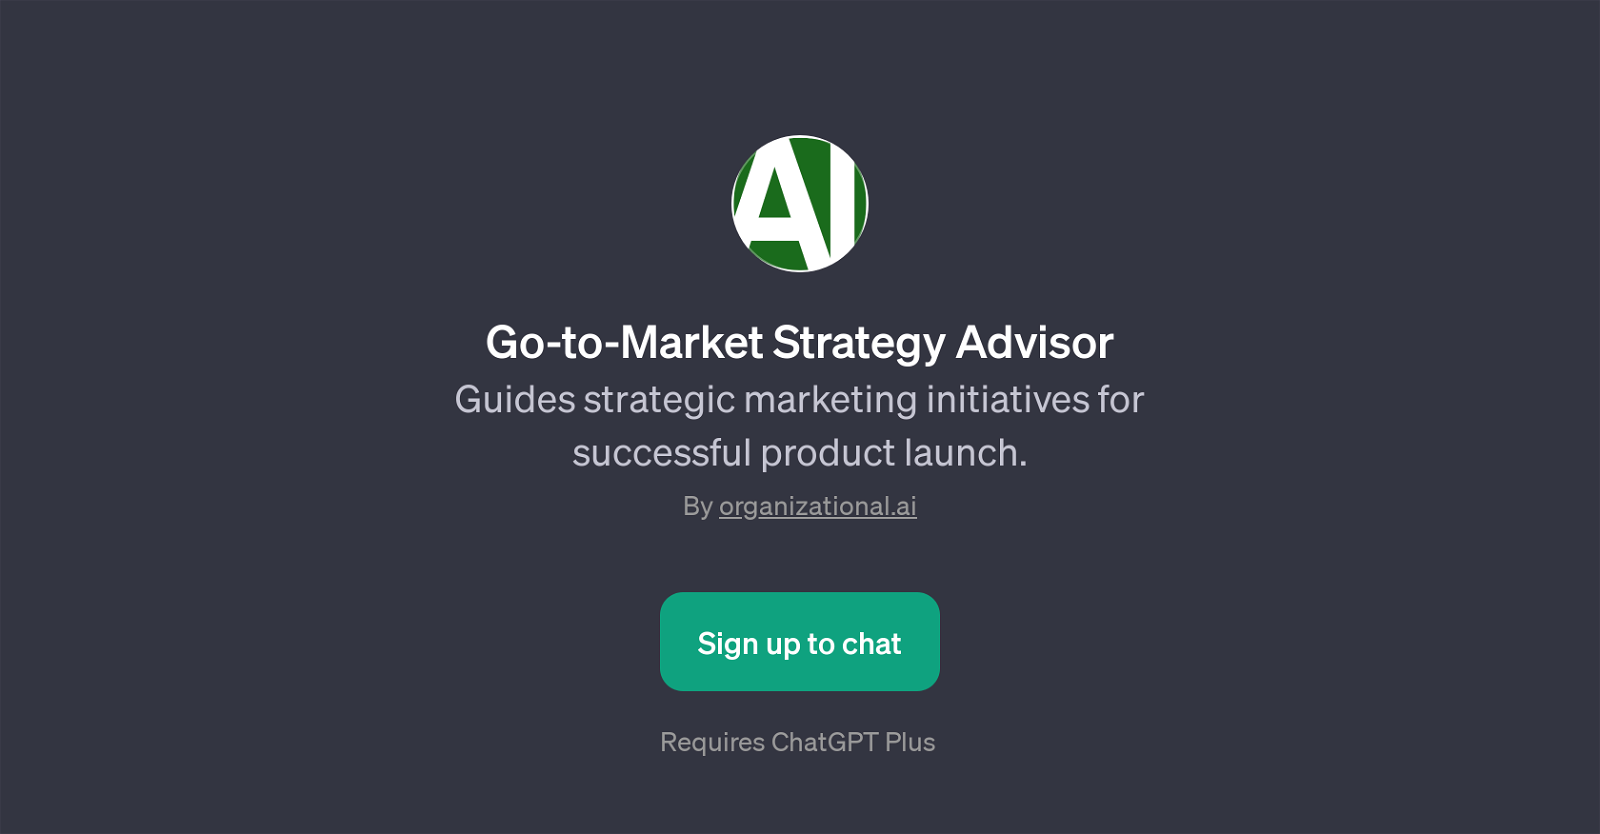 Go-to-Market Strategy Advisor website